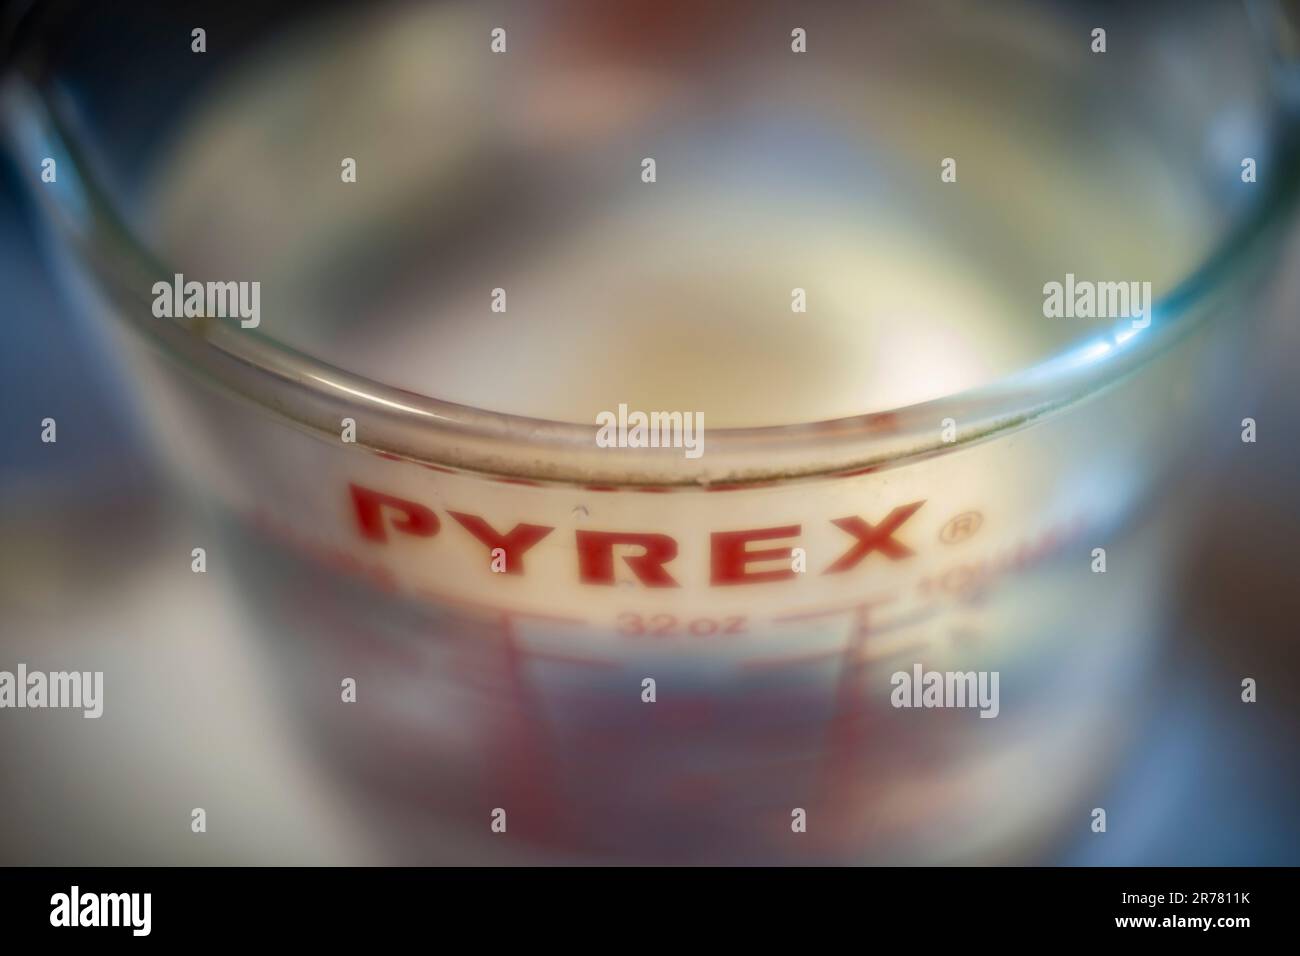 Instant Pot, Pyrex Maker Instant Brands Draws Interest From